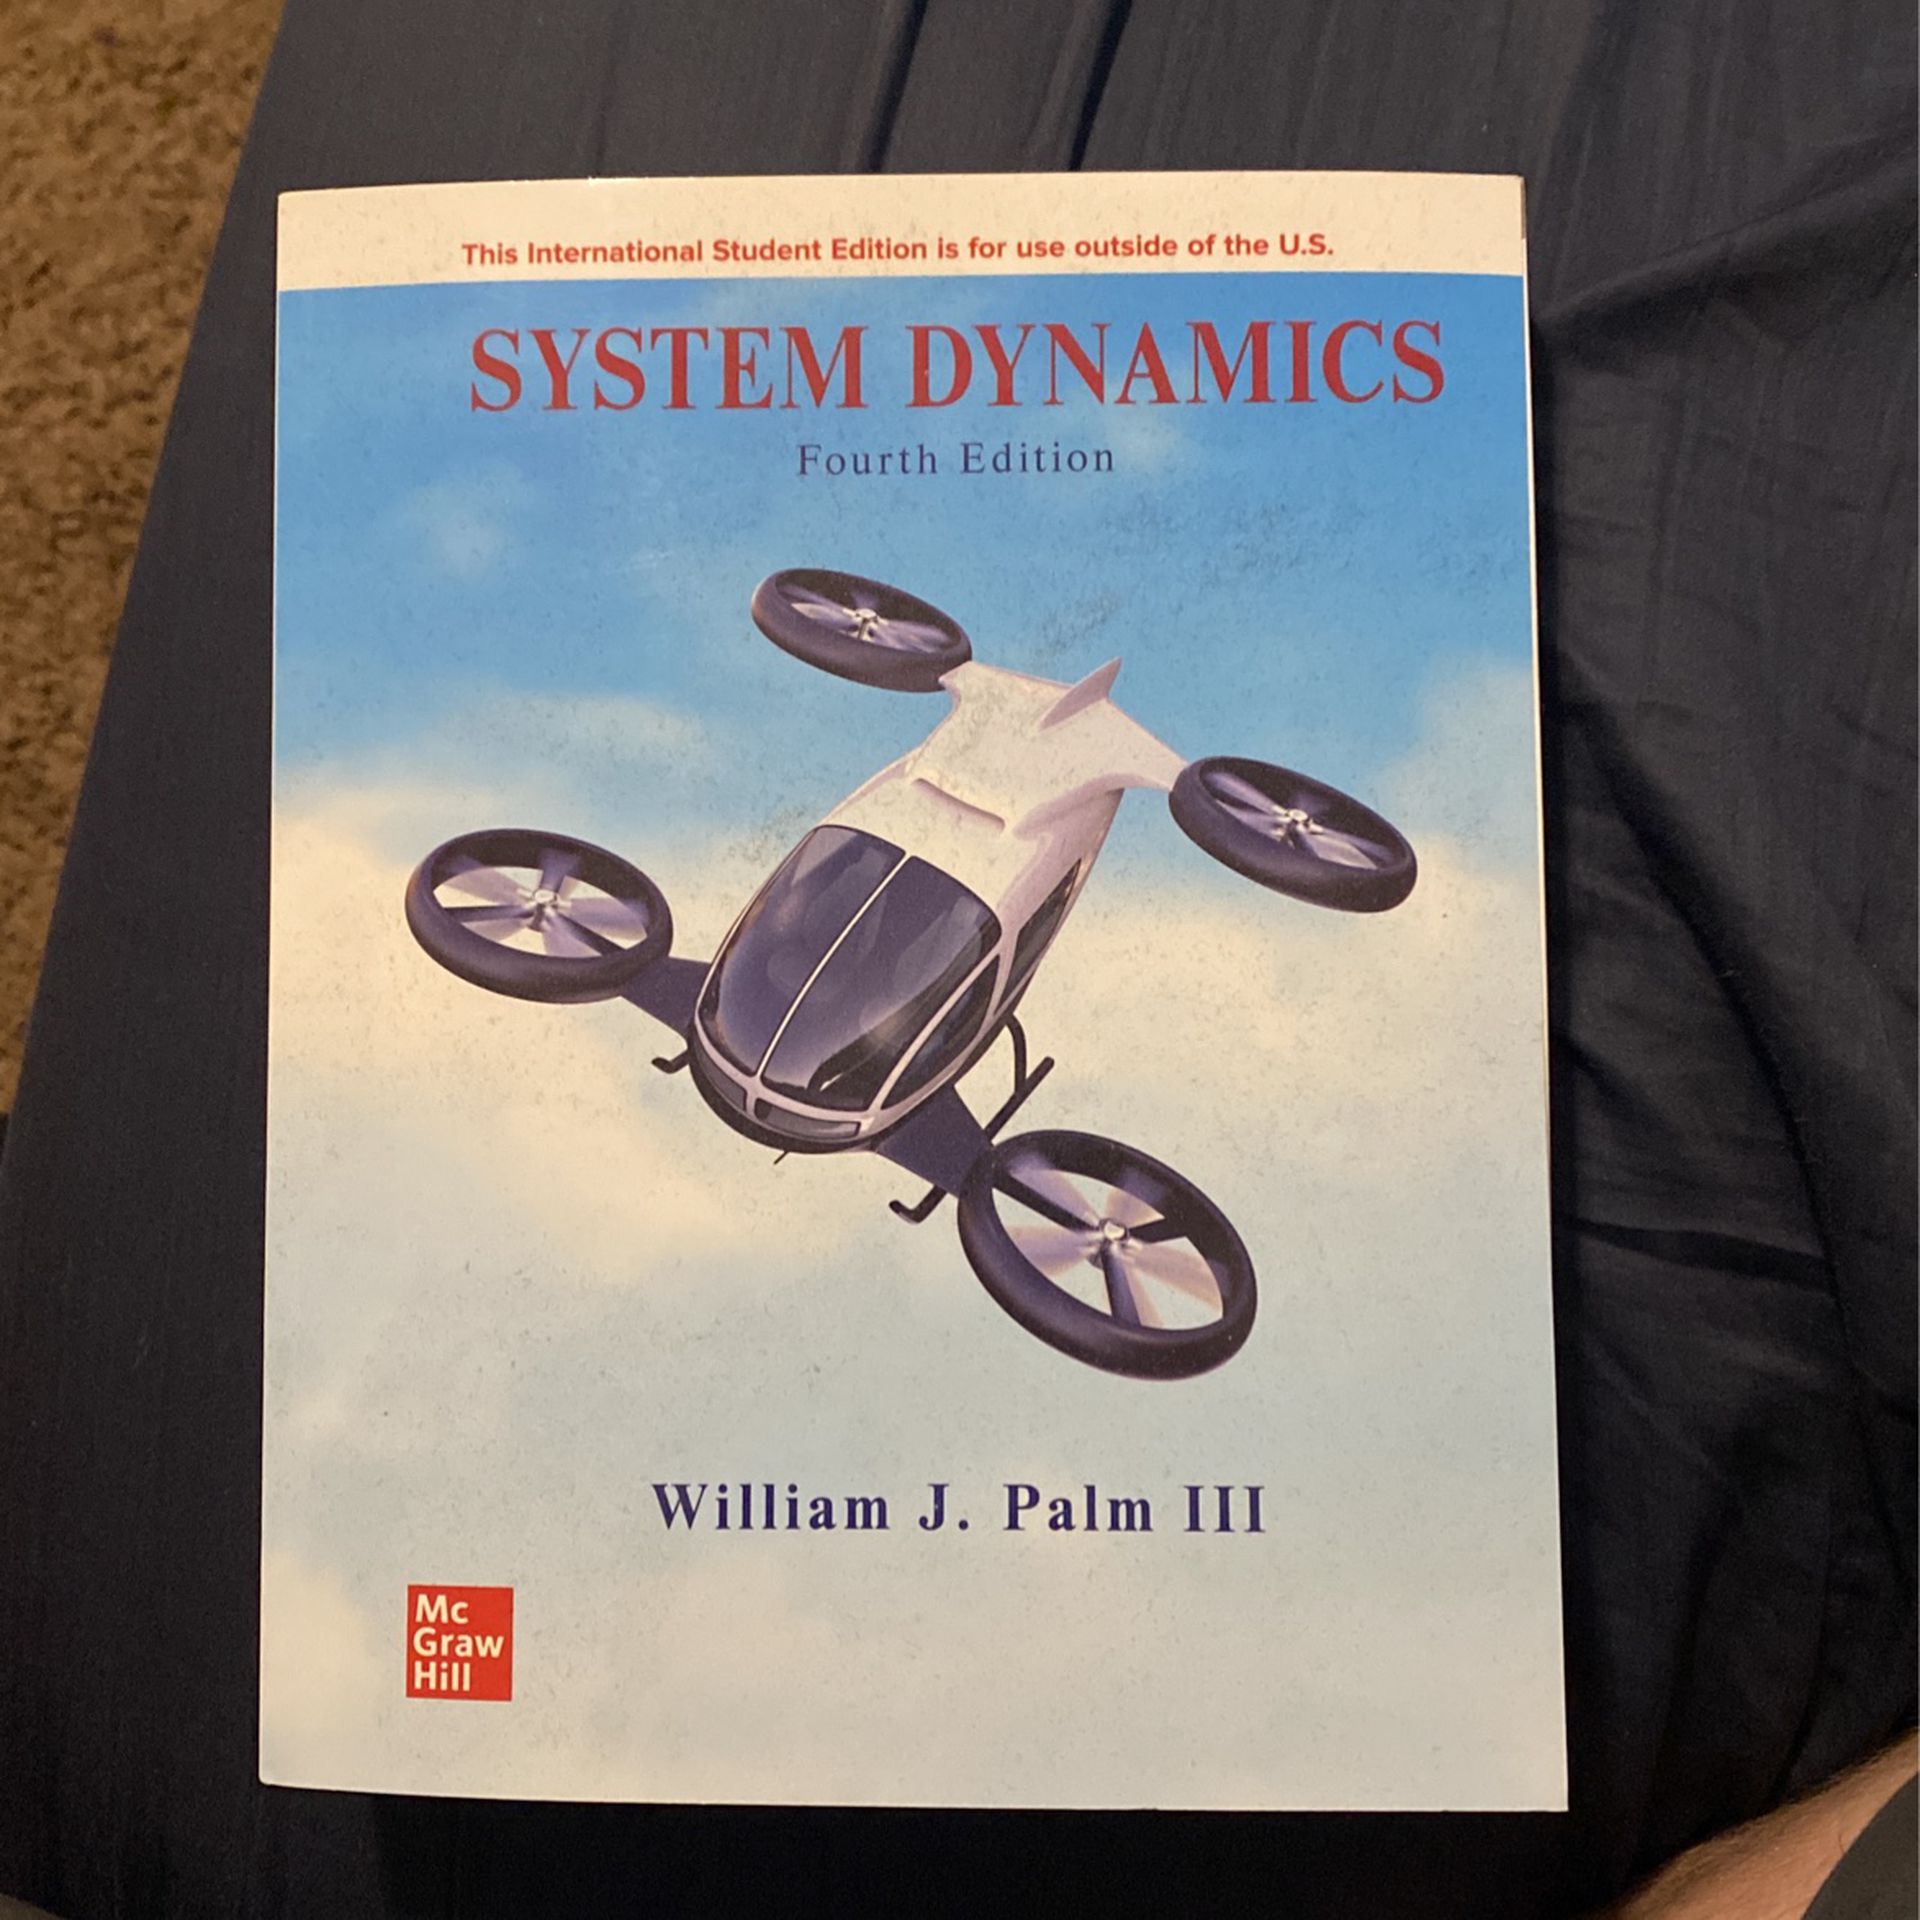 System dynamics text book